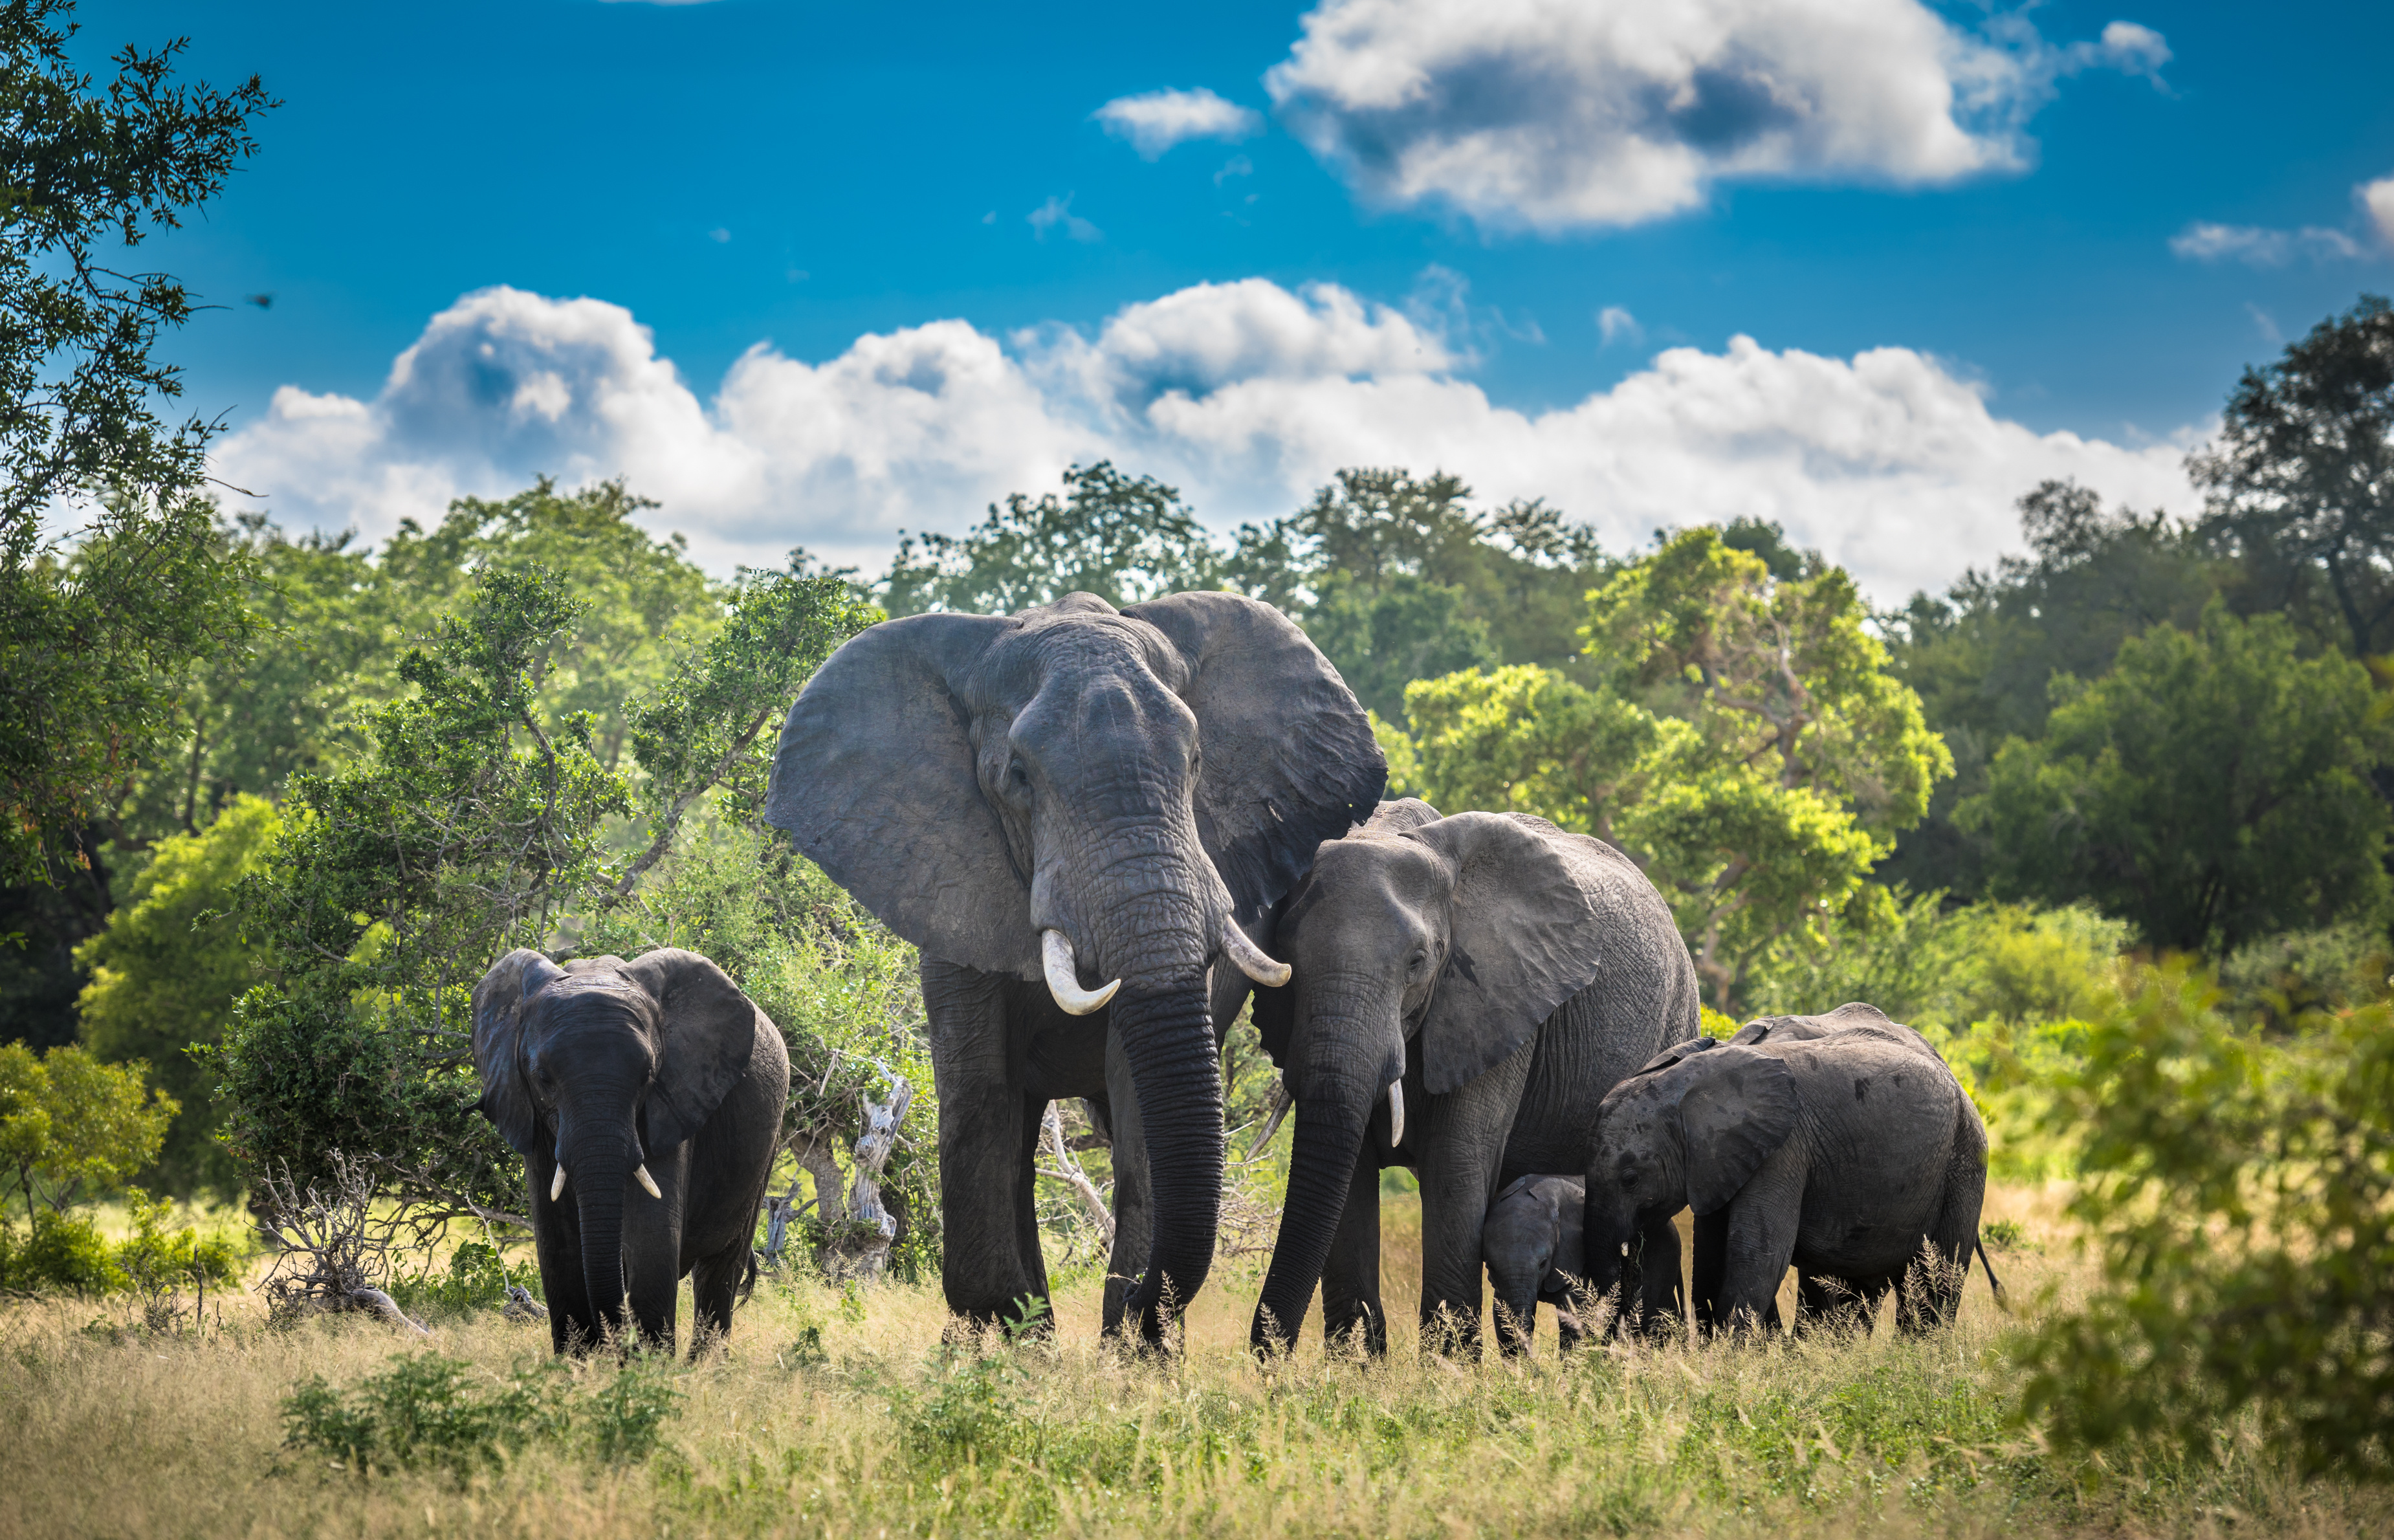 elephants-family-in-kruger-national-park-south-africa-AdobeStock_320641460.jpeg